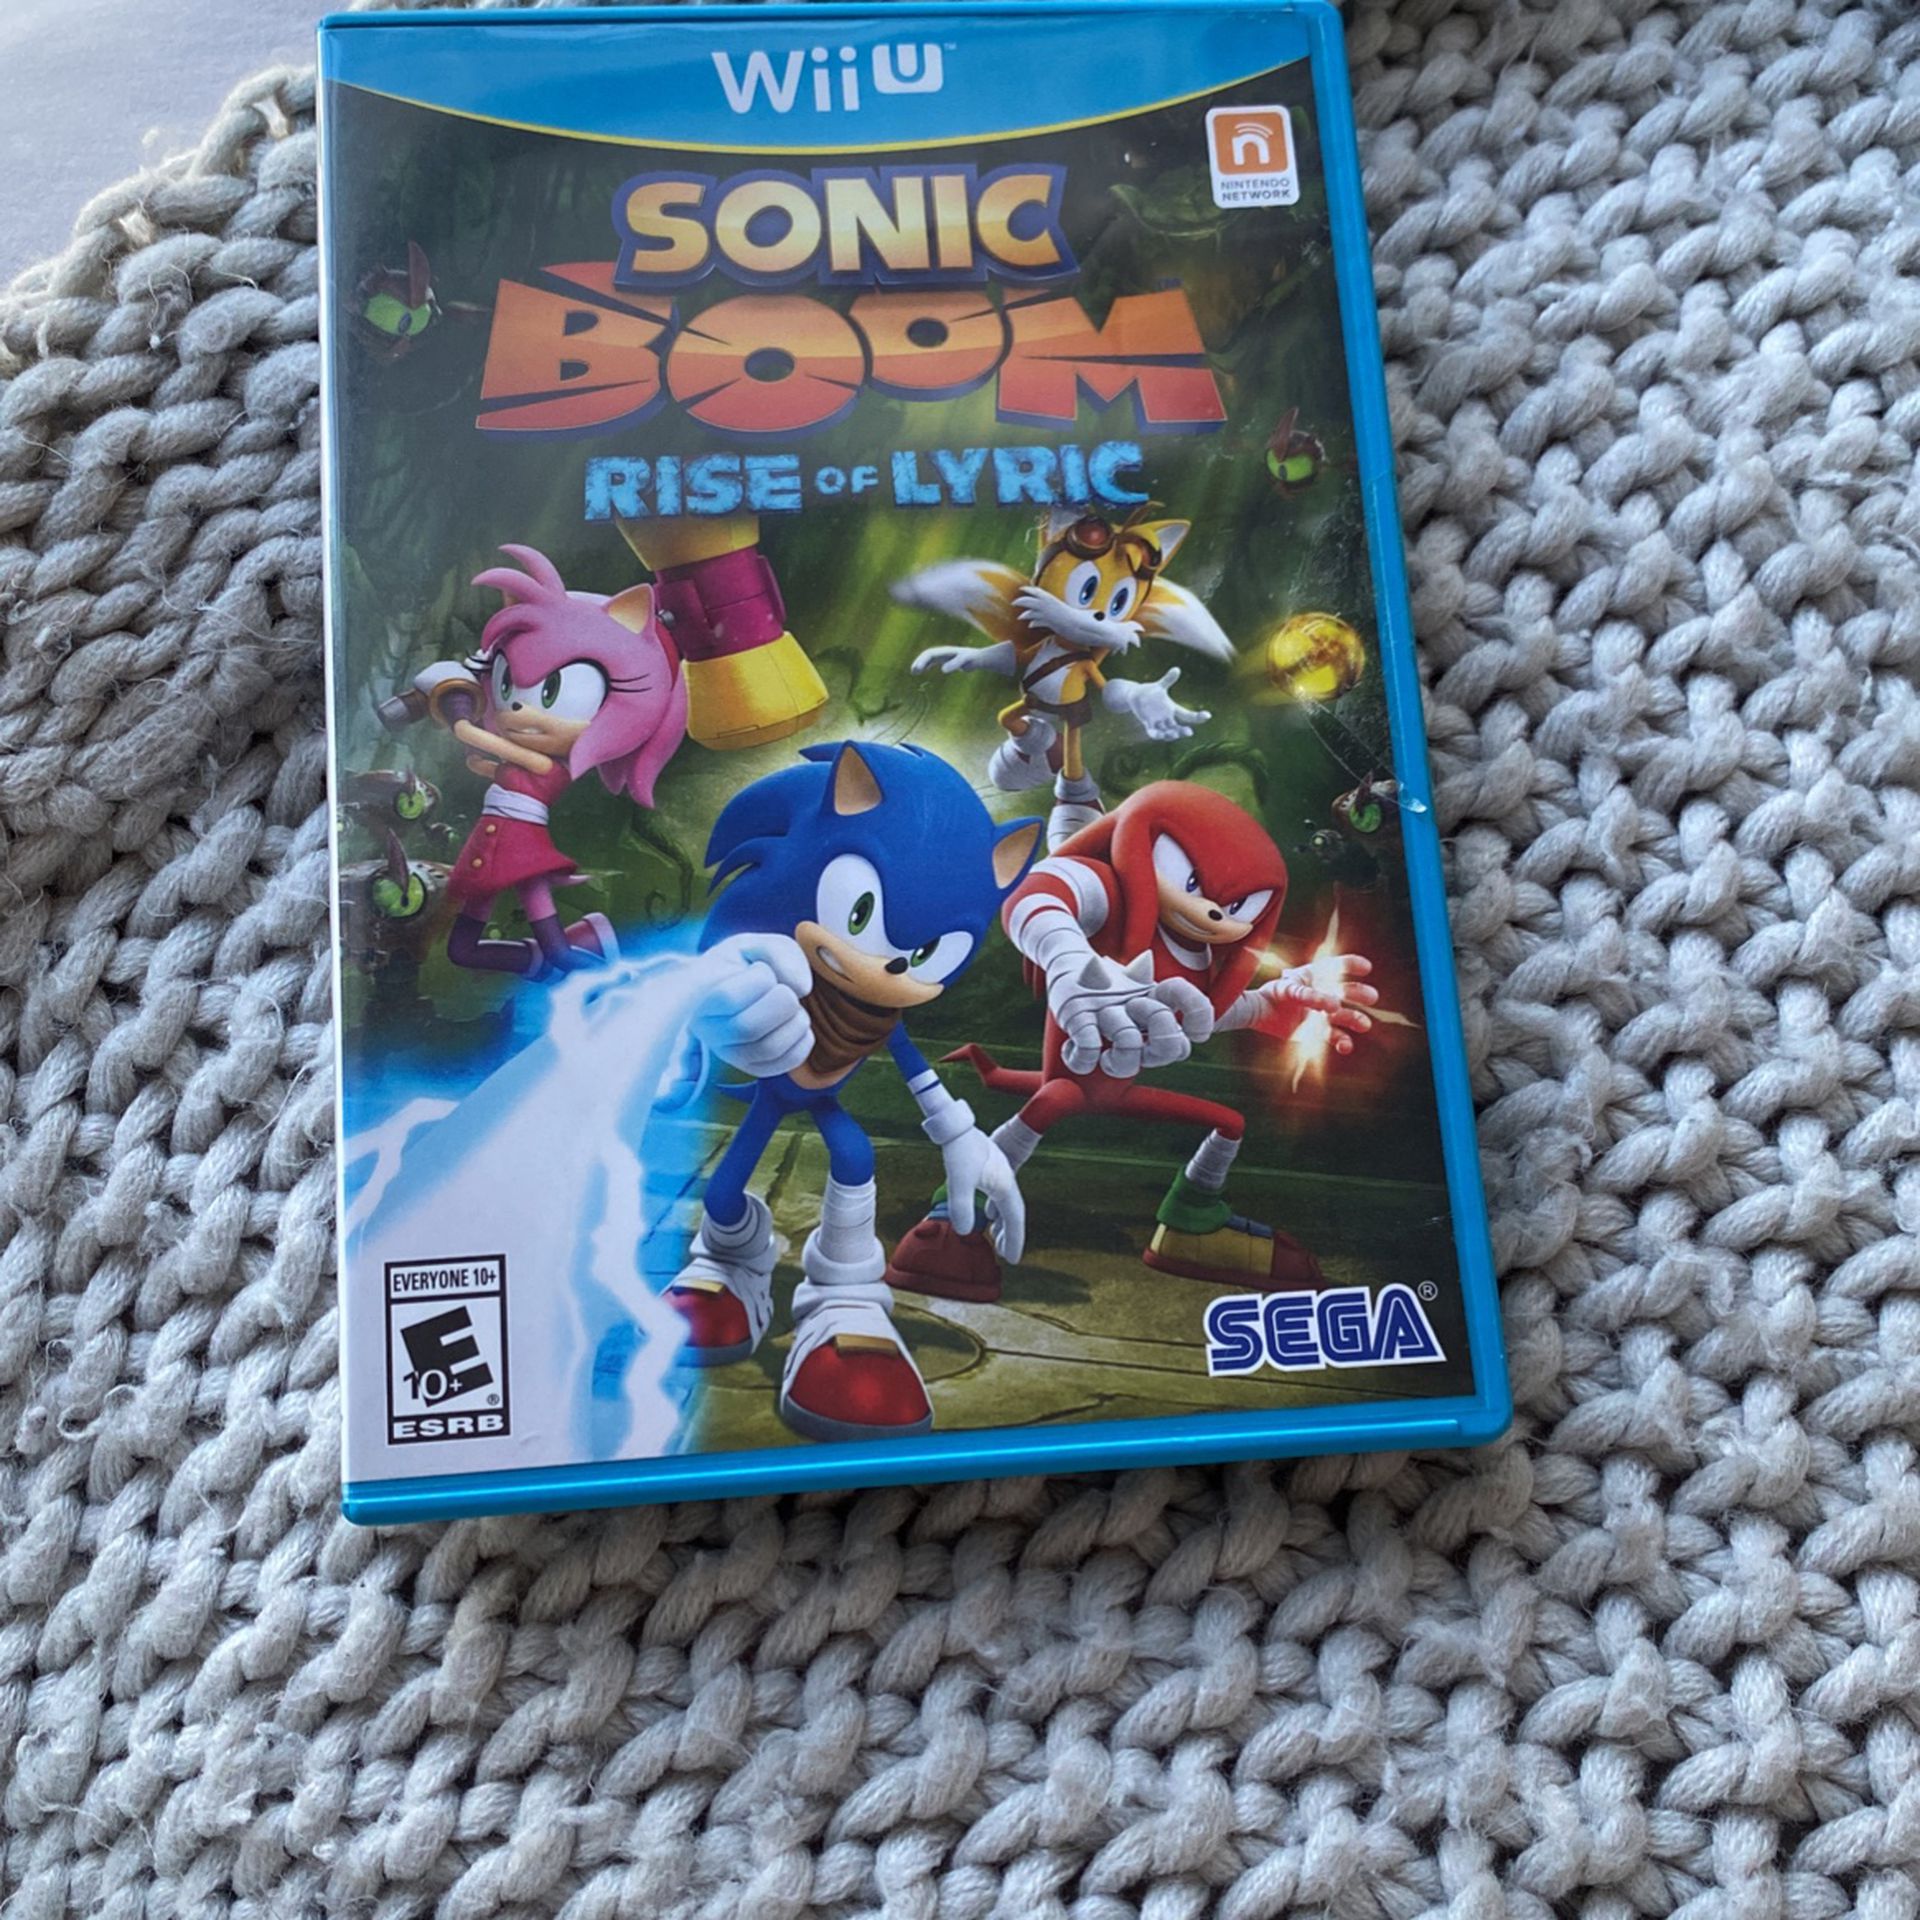 Wii U Sonic Boom